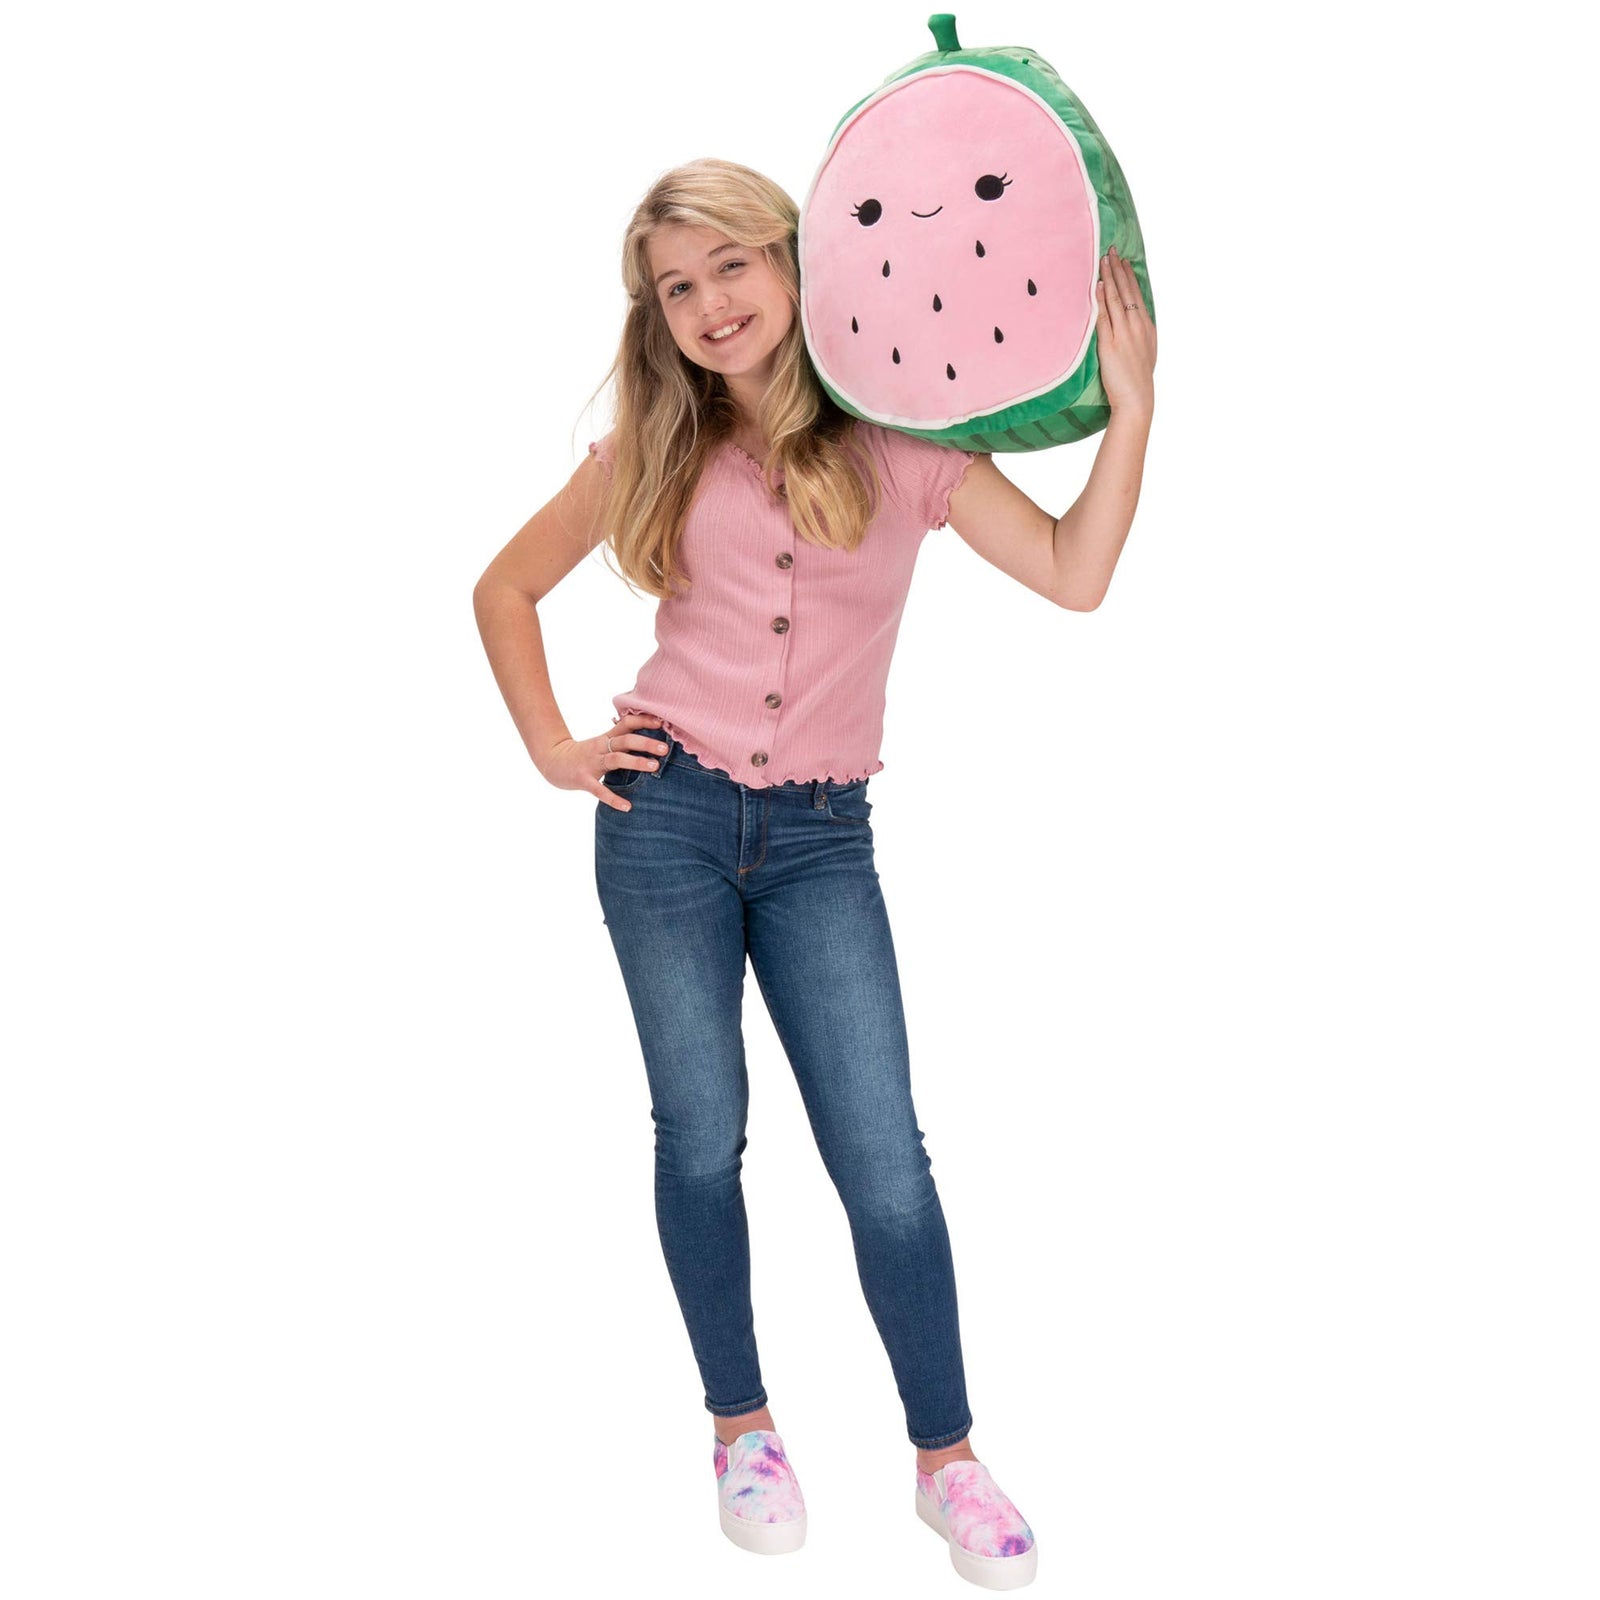 Squishmallow Official Kellytoy Plush 16" Wanda The Watermelon- Ultrasoft Stuffed Animal Plush Toy